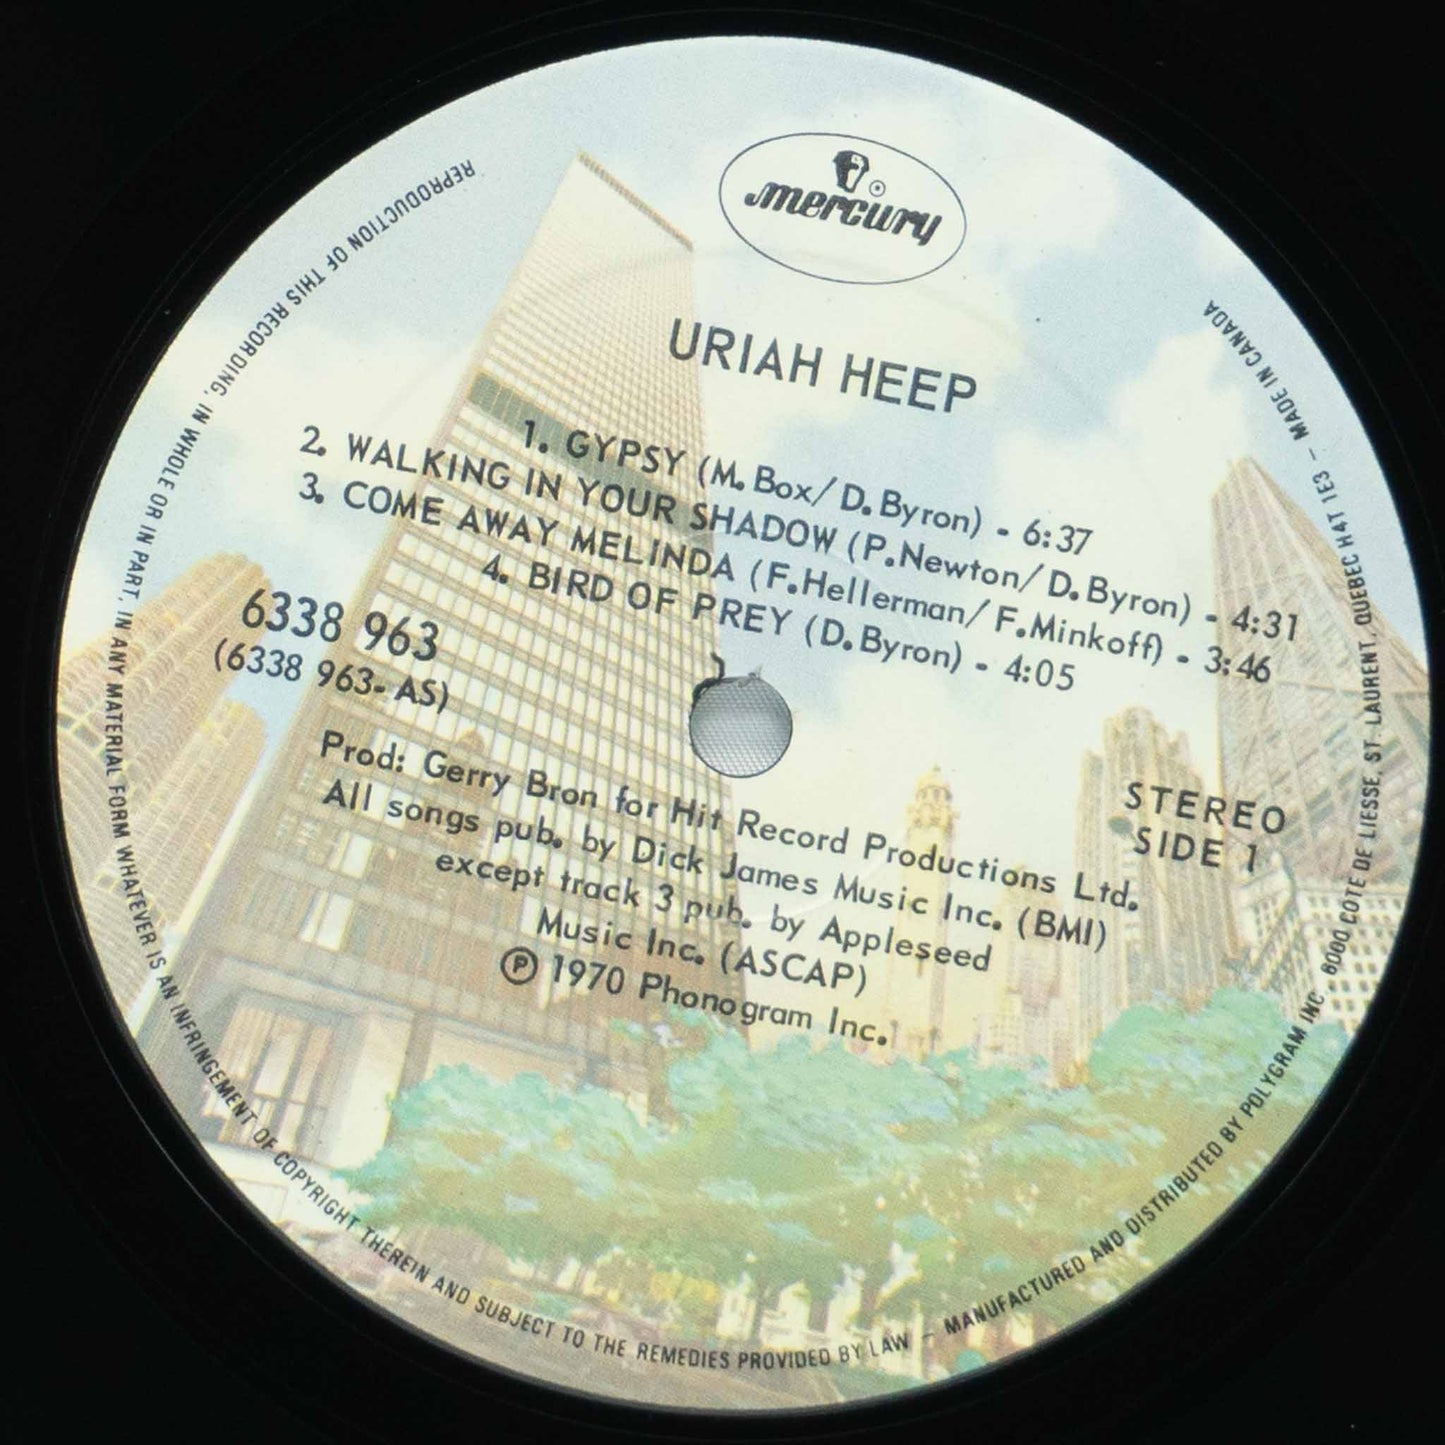 Uriah Heep – Uriah Heep